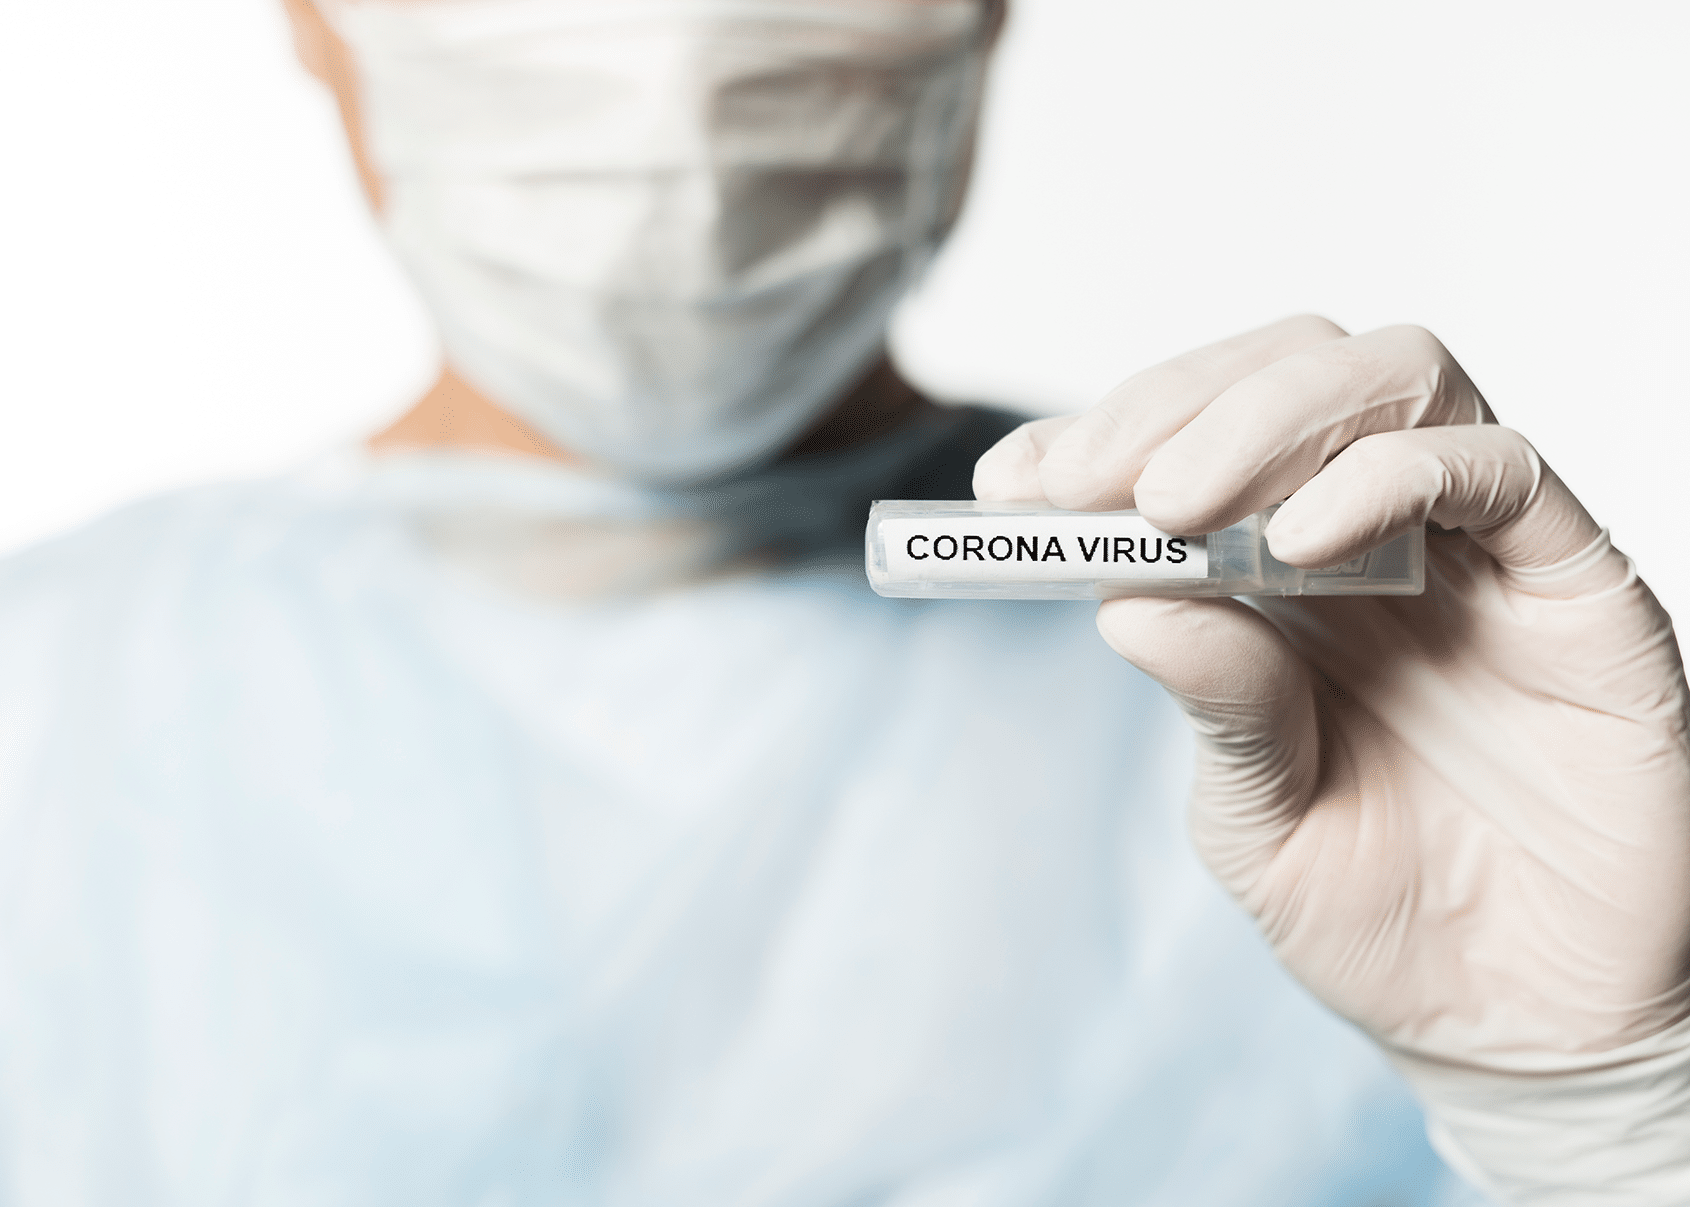 6 ways to prepare your medical practice for coronavirus